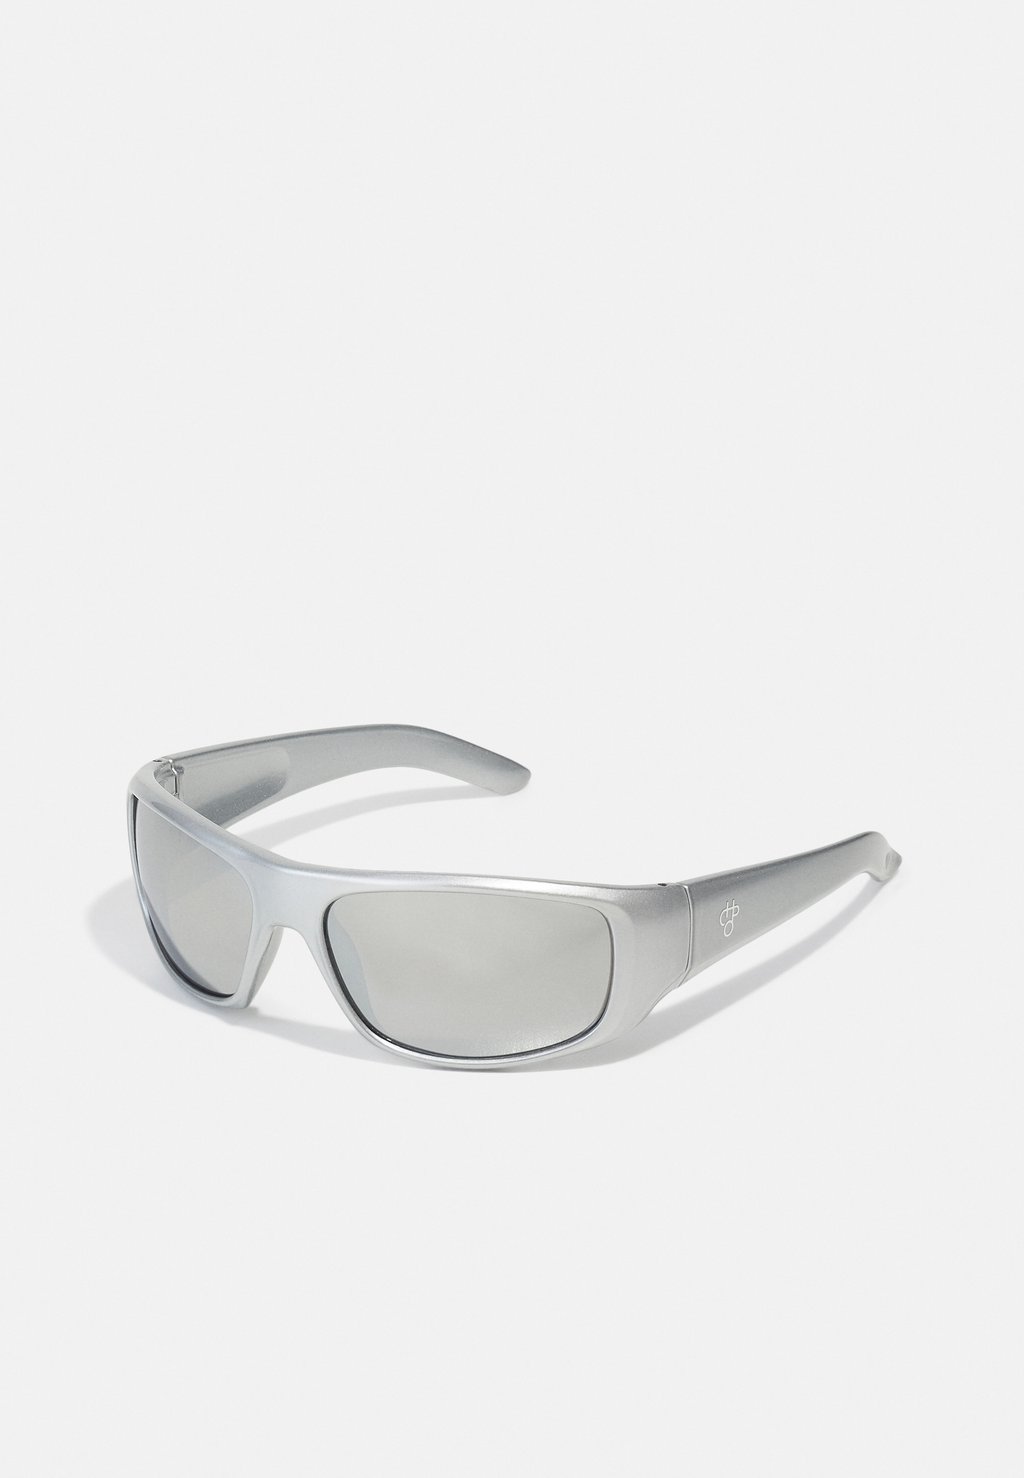 Солнцезащитные очки Ingemar Unisex CHPO, цвет silver-coloured солнцезащитные очки unisex gucci цвет black silver coloured